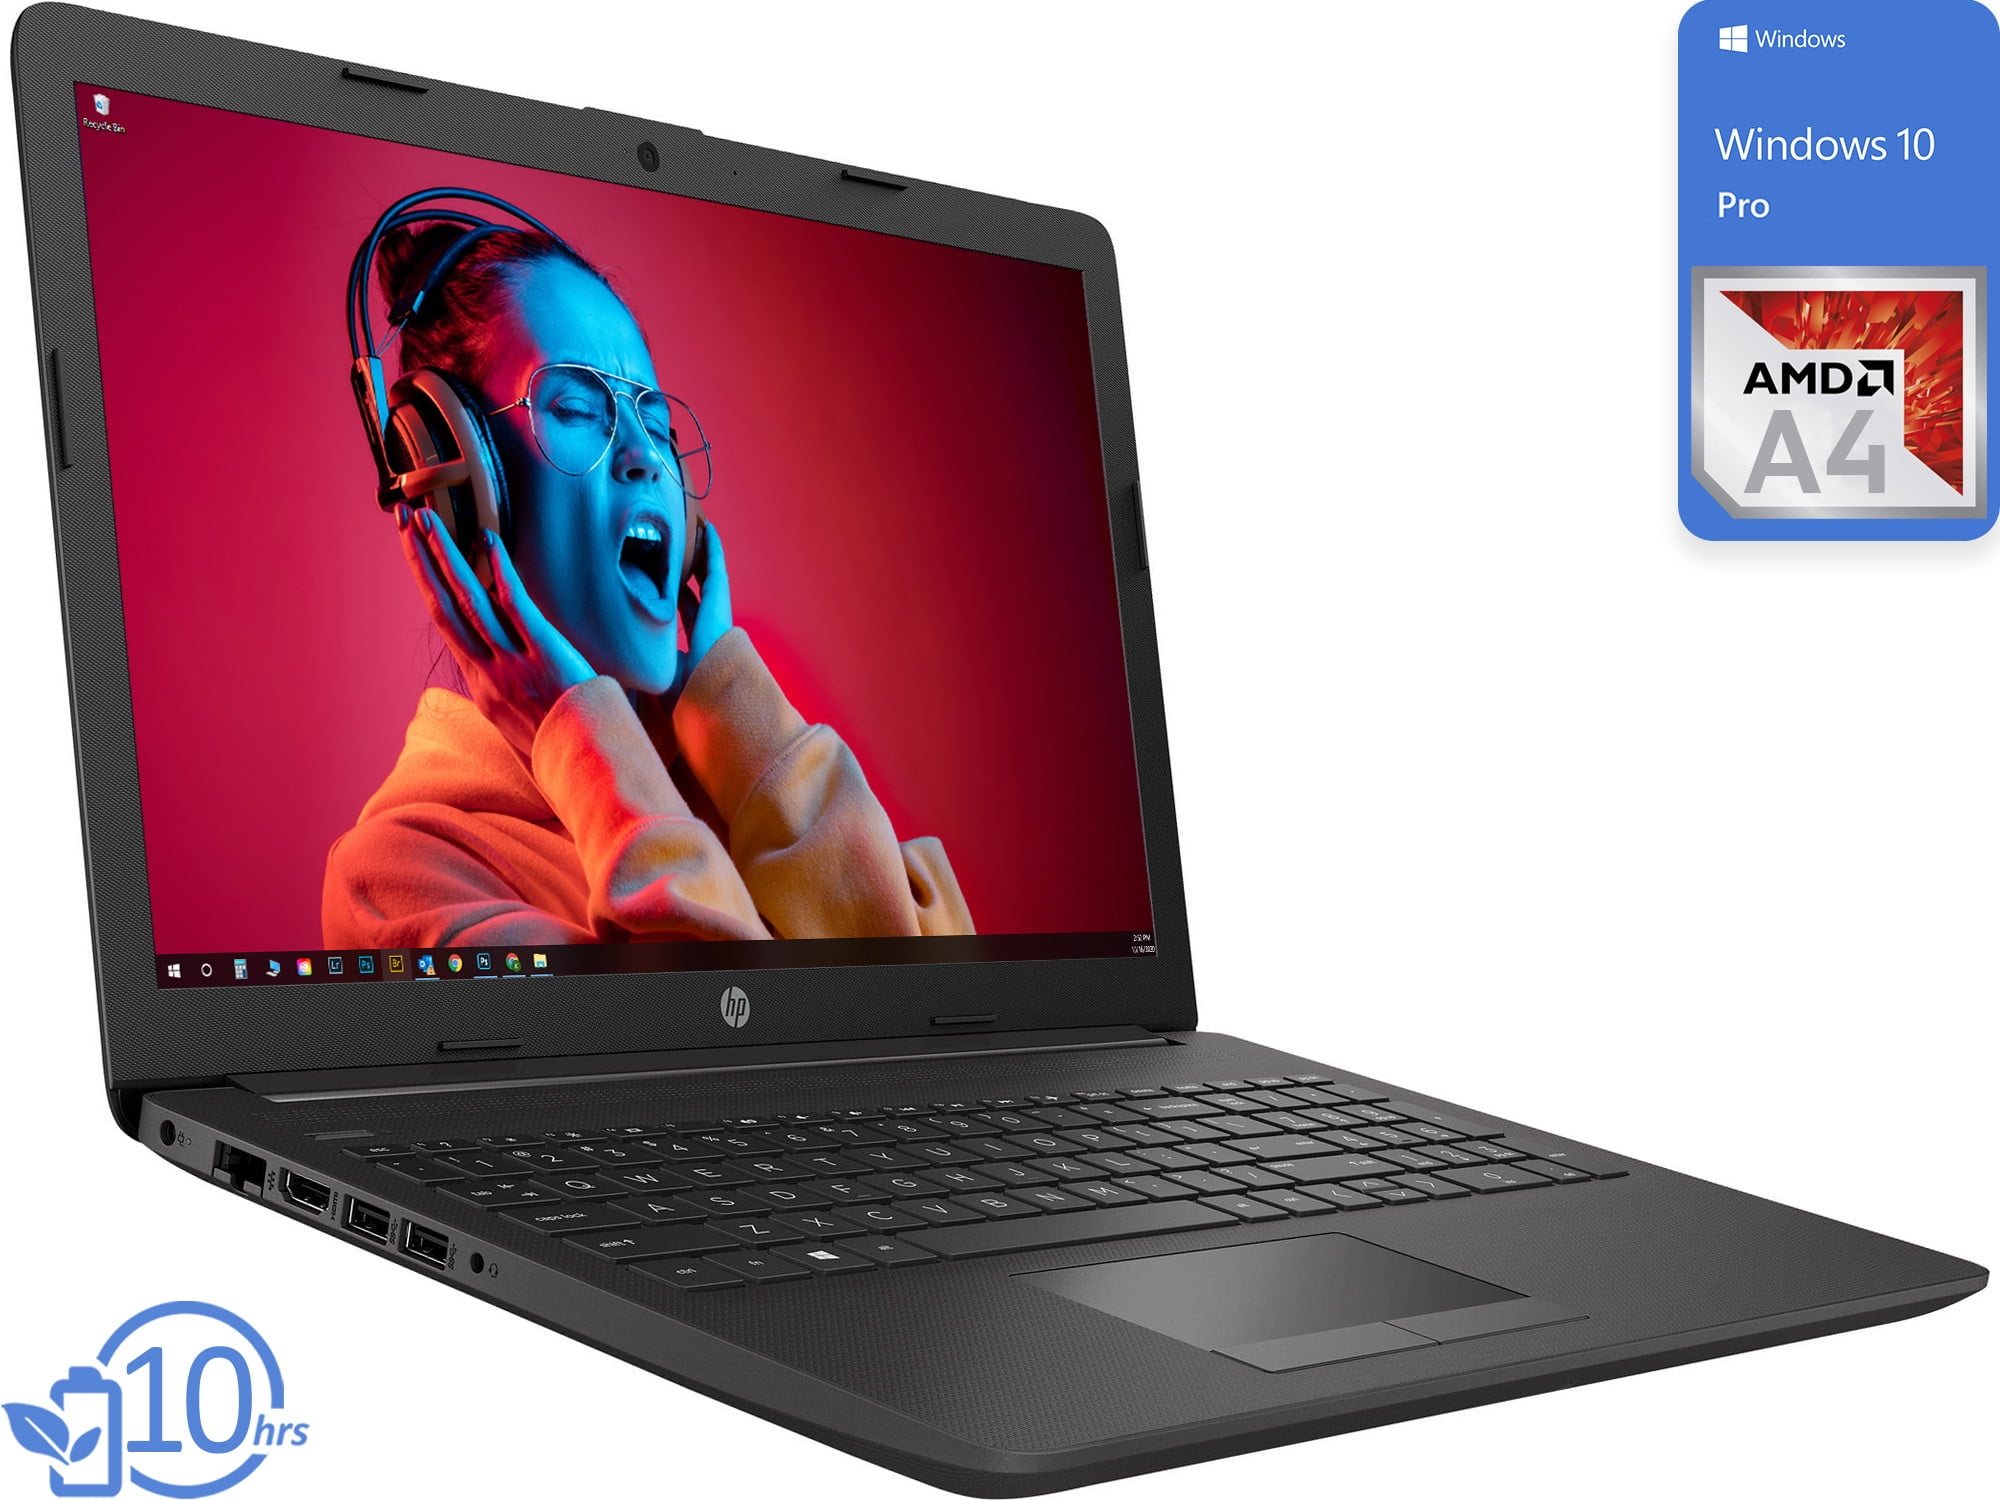 Dosering accumuleren Snor HP 255 G7 Notebook 15.6" PC Laptop, AMD A4, 4GB RAM, 500GB HD, DVD-RW,  Windows 10, Black - Walmart.com